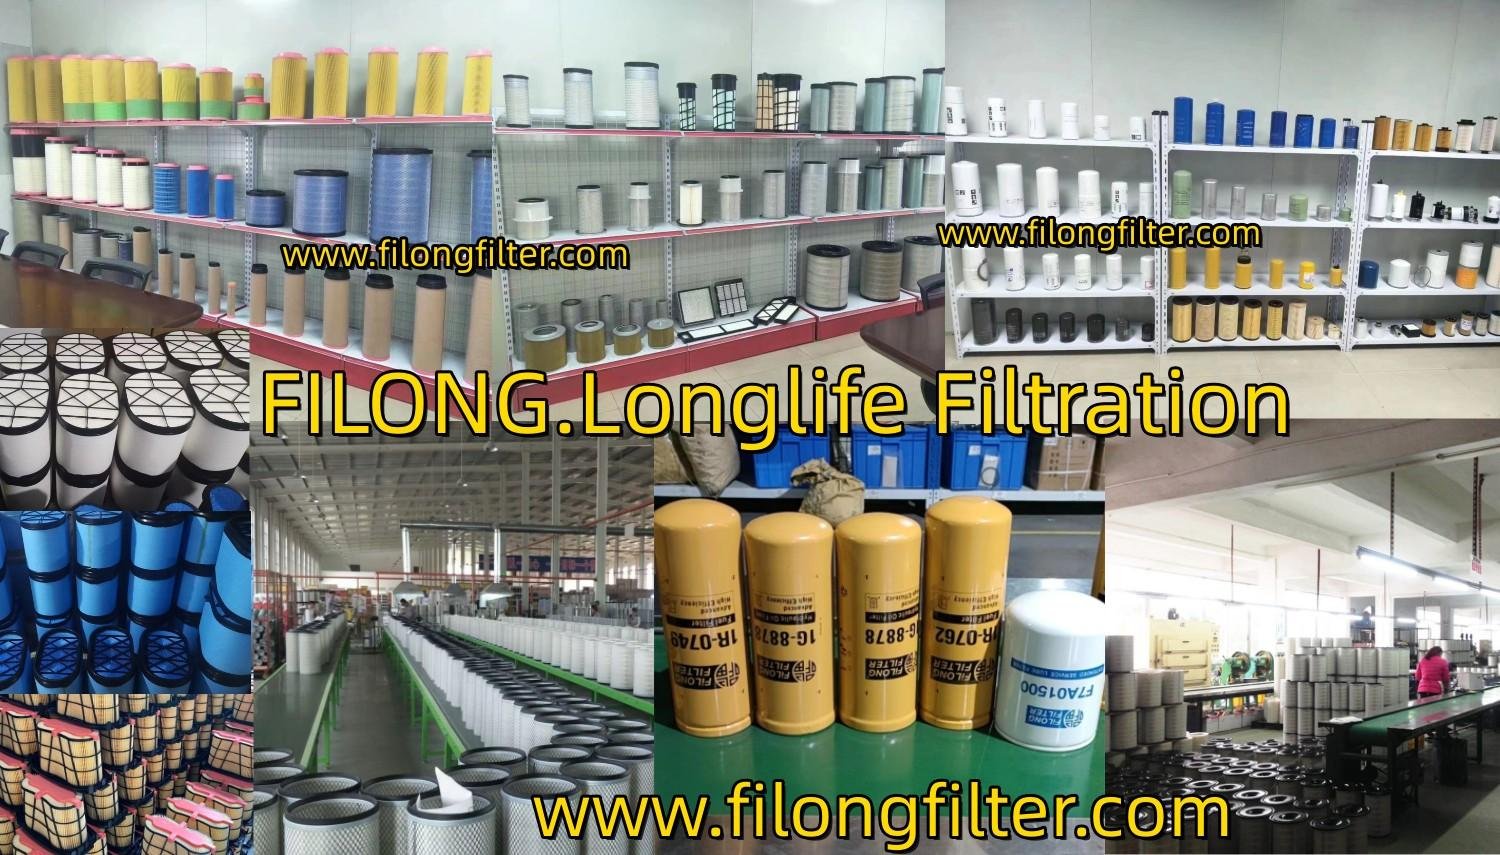 FILONG FILTER Manufacturers in china,Suppliers In China,  FACTORY In China,  AUTOMOTIVE FILTERS Manufacturers In China,AUTOMOBILE FILTERS Manufacturers In China ,Car filter  Manufacturers In China oil filter Manufacturers in china,fuel filter Manufacturers in china,Air Filter  Manufacturers in china ,cabin filter Manufacturers in china,hydraulic filter Manufacturers in china,iveco filter Manufacturers in china,volvo filter Manufacturers in china,caterpillar filter Manufacturers in china,man filter Manufacturers in china,jcb filter Manufacturers in china,john deere filter Manufacturers in china,scania filter Manufacturers in china,mercedes benz filter Manufacturers in china,daf filter Manufacturers in china,perkins filter Manufacturers in china,renault filter Manufacturers in china,hitachi filter Manufacturers in china,deutz filter Manufacturers in china,cummins filter Manufacturers in china,howo filter Manufacturers in china,weichai filter Manufacturers in china,thermo king filter Manufacturers in china,komatsu filter Manufacturers in china, FILONG FILTER FACTORY, Baldwin/Fleetguard/Donaldson/Mann/Hengst,High quality and Good price from China-GREATMAN FILTER,AIR FILTER,OIL FILTER,FUEL FILTER,CABIN FILTER,REPLACE OF FLEETGUARD FILTER,MANN FILTER,BLADWIN FILTER,HENGST FILTER,VOLKSWAGEN,SKODA,AUDI, MERCEDES Benz, BMW,CITROEN ,PEUGEOT , FORD, FIAT-LADA,  RENAULT & DACIA , TOYOTA,  NISSIN & SUBARU, MAZDA, MITSUBISHI, HYUNDAI & KIA  , HONDA,LANDROVER,OPEL&BUICK&CHEVROLET,  DODGE-CHRYSLER,ISUZU, SUZUKI,SSANGYONG,  MAN, DAF,KOMATSU,HINO,DEUTZ IVECO,VOLVO,SCANIA,JCB,JOHN DEERE,CATERPILLAR,NEW HOLLAND,HITACHI,DOOSAN DAEWOO,CUMMINS,